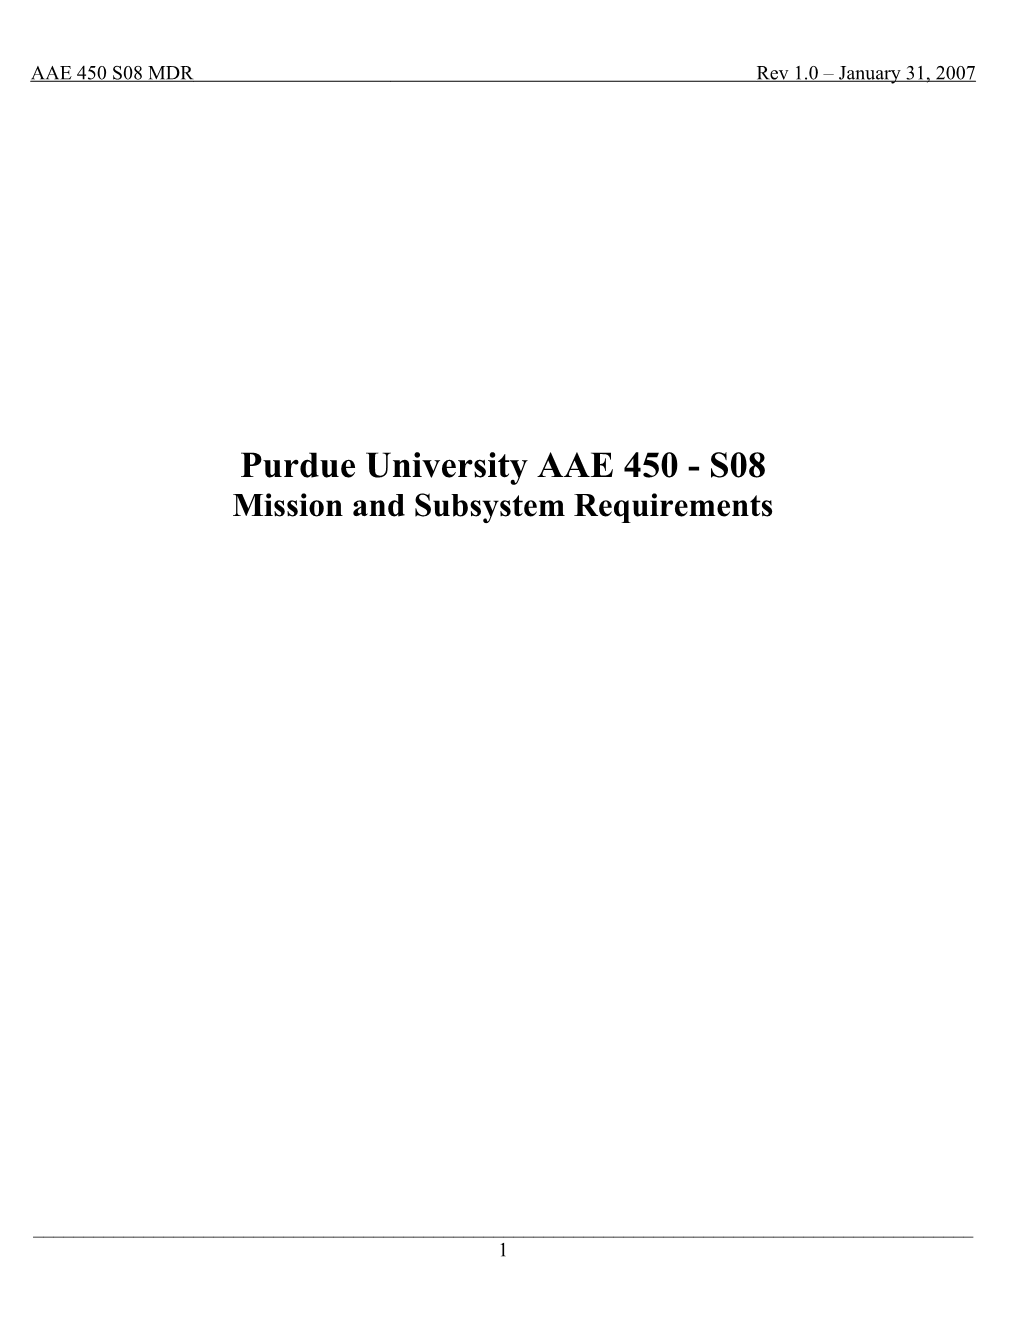 Purdue University AAE 450 - S08